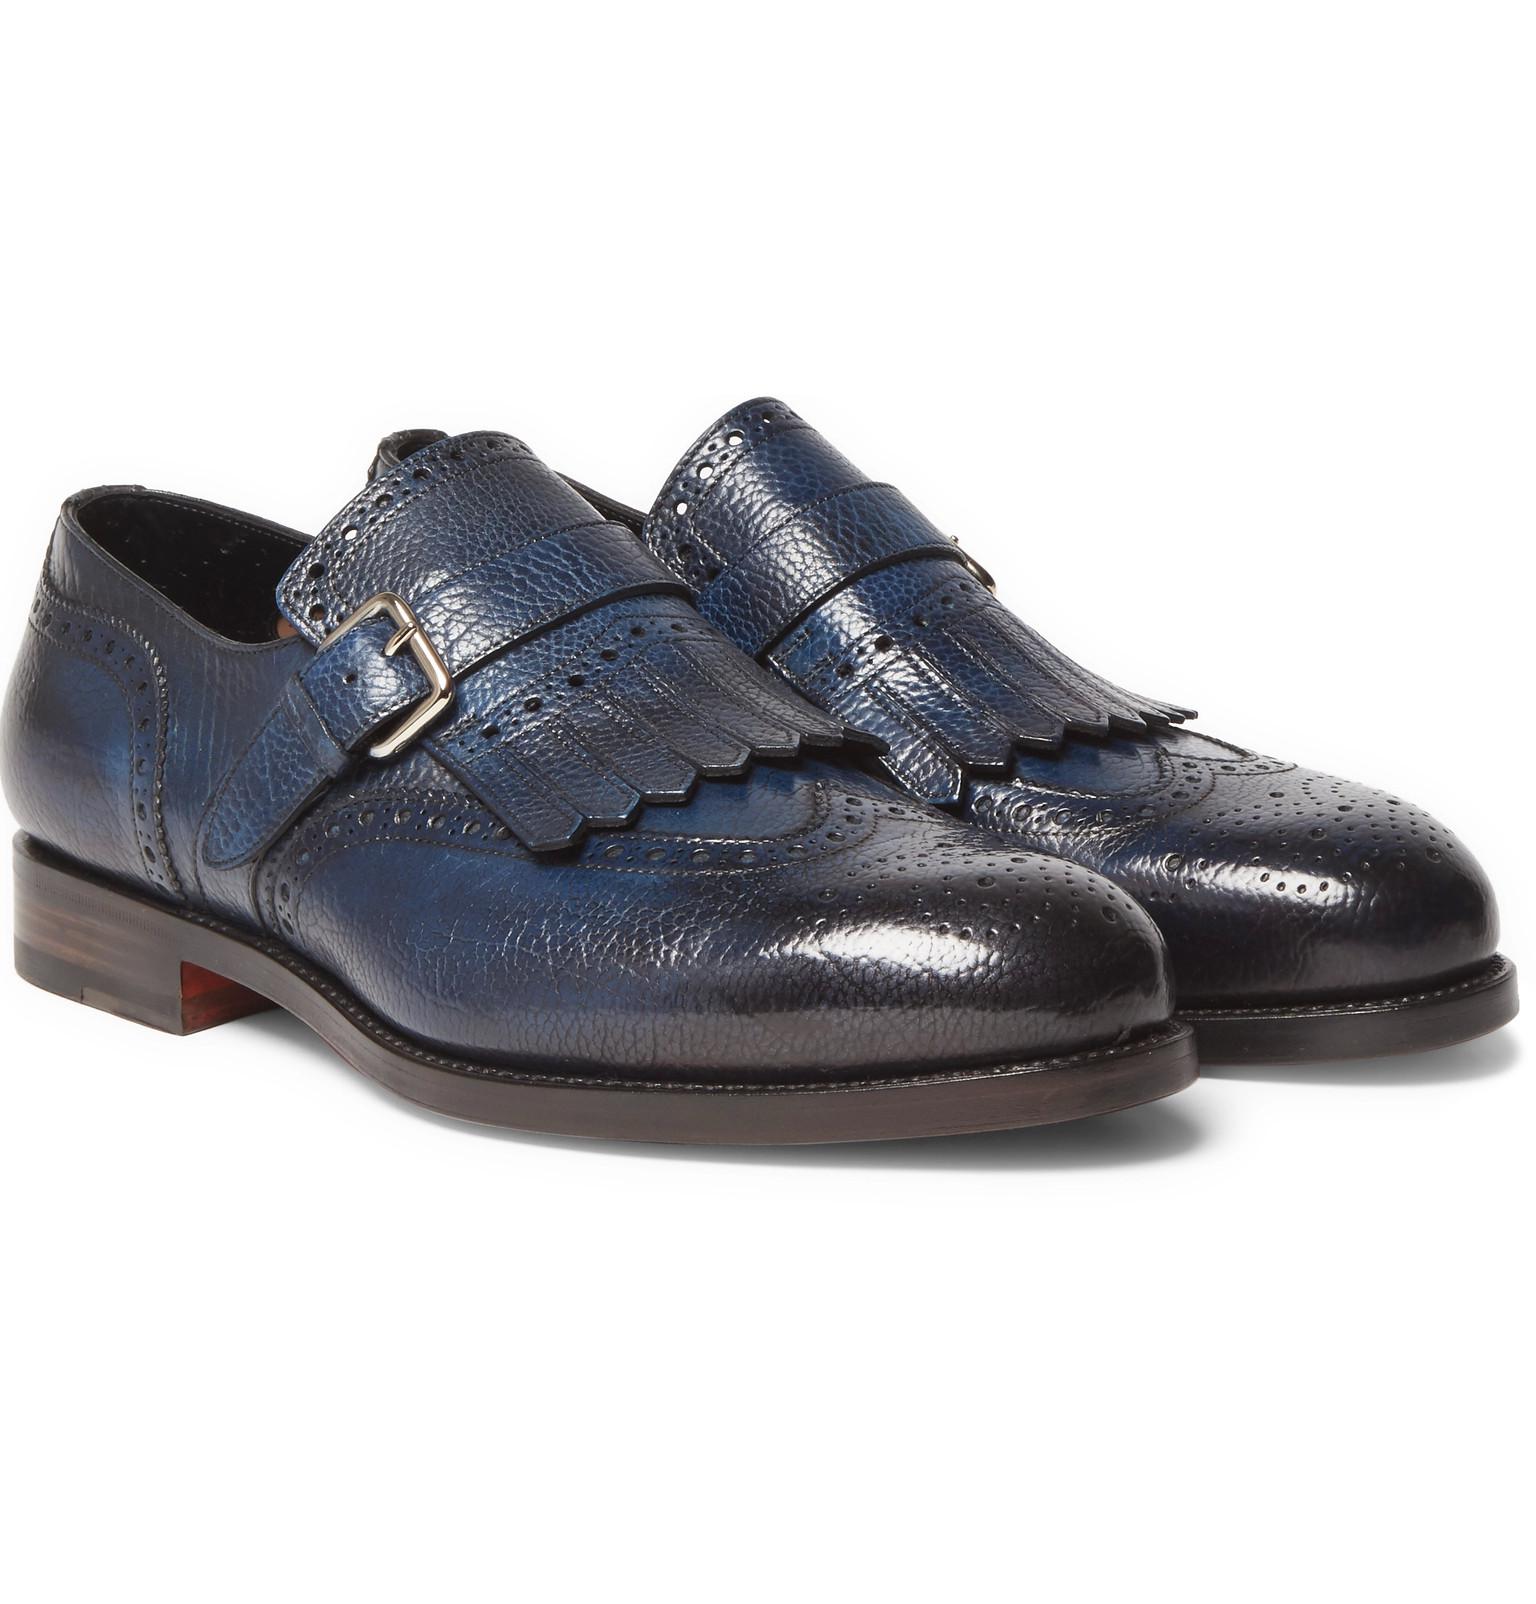 Santoni Burnished Full-grain Leather Loafers in Blue for Men - Lyst